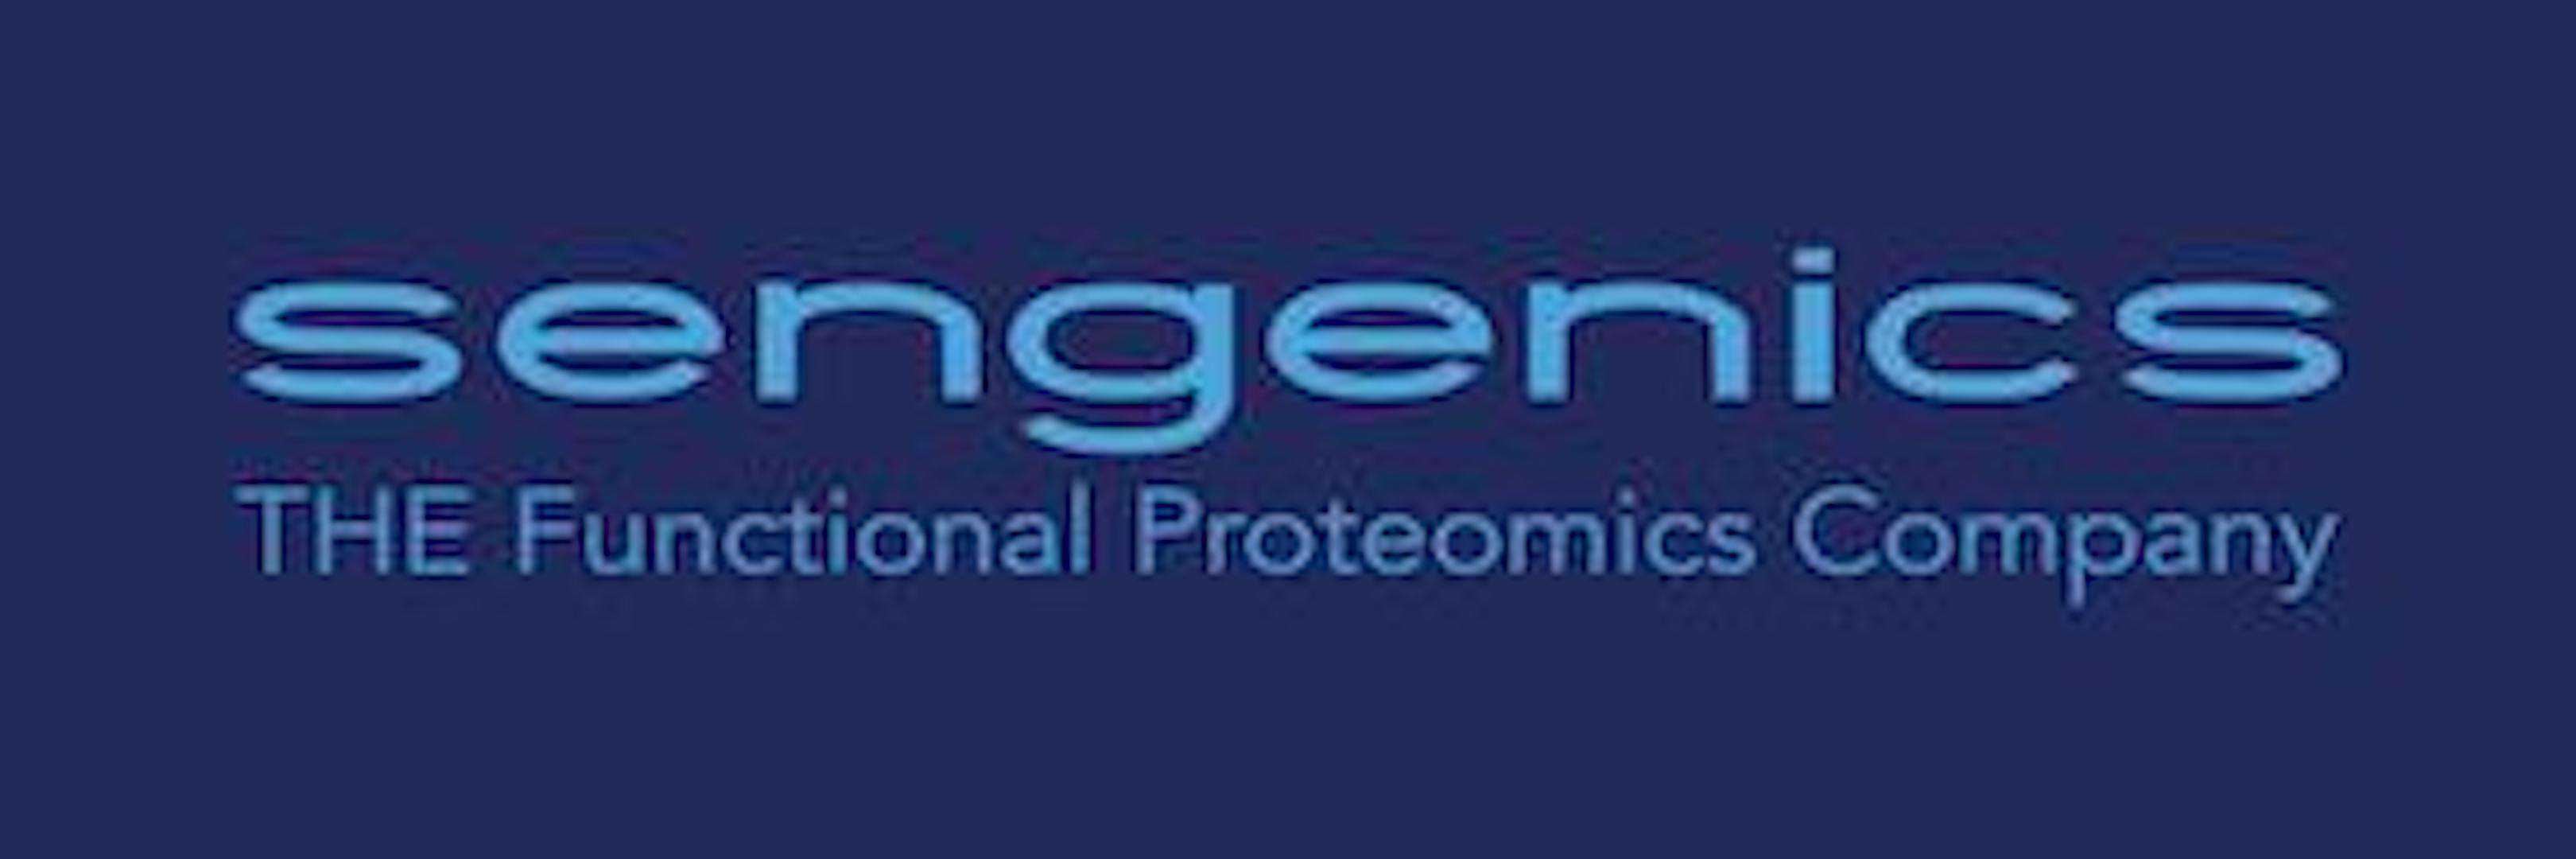 Sengenics International Pte Ltd.